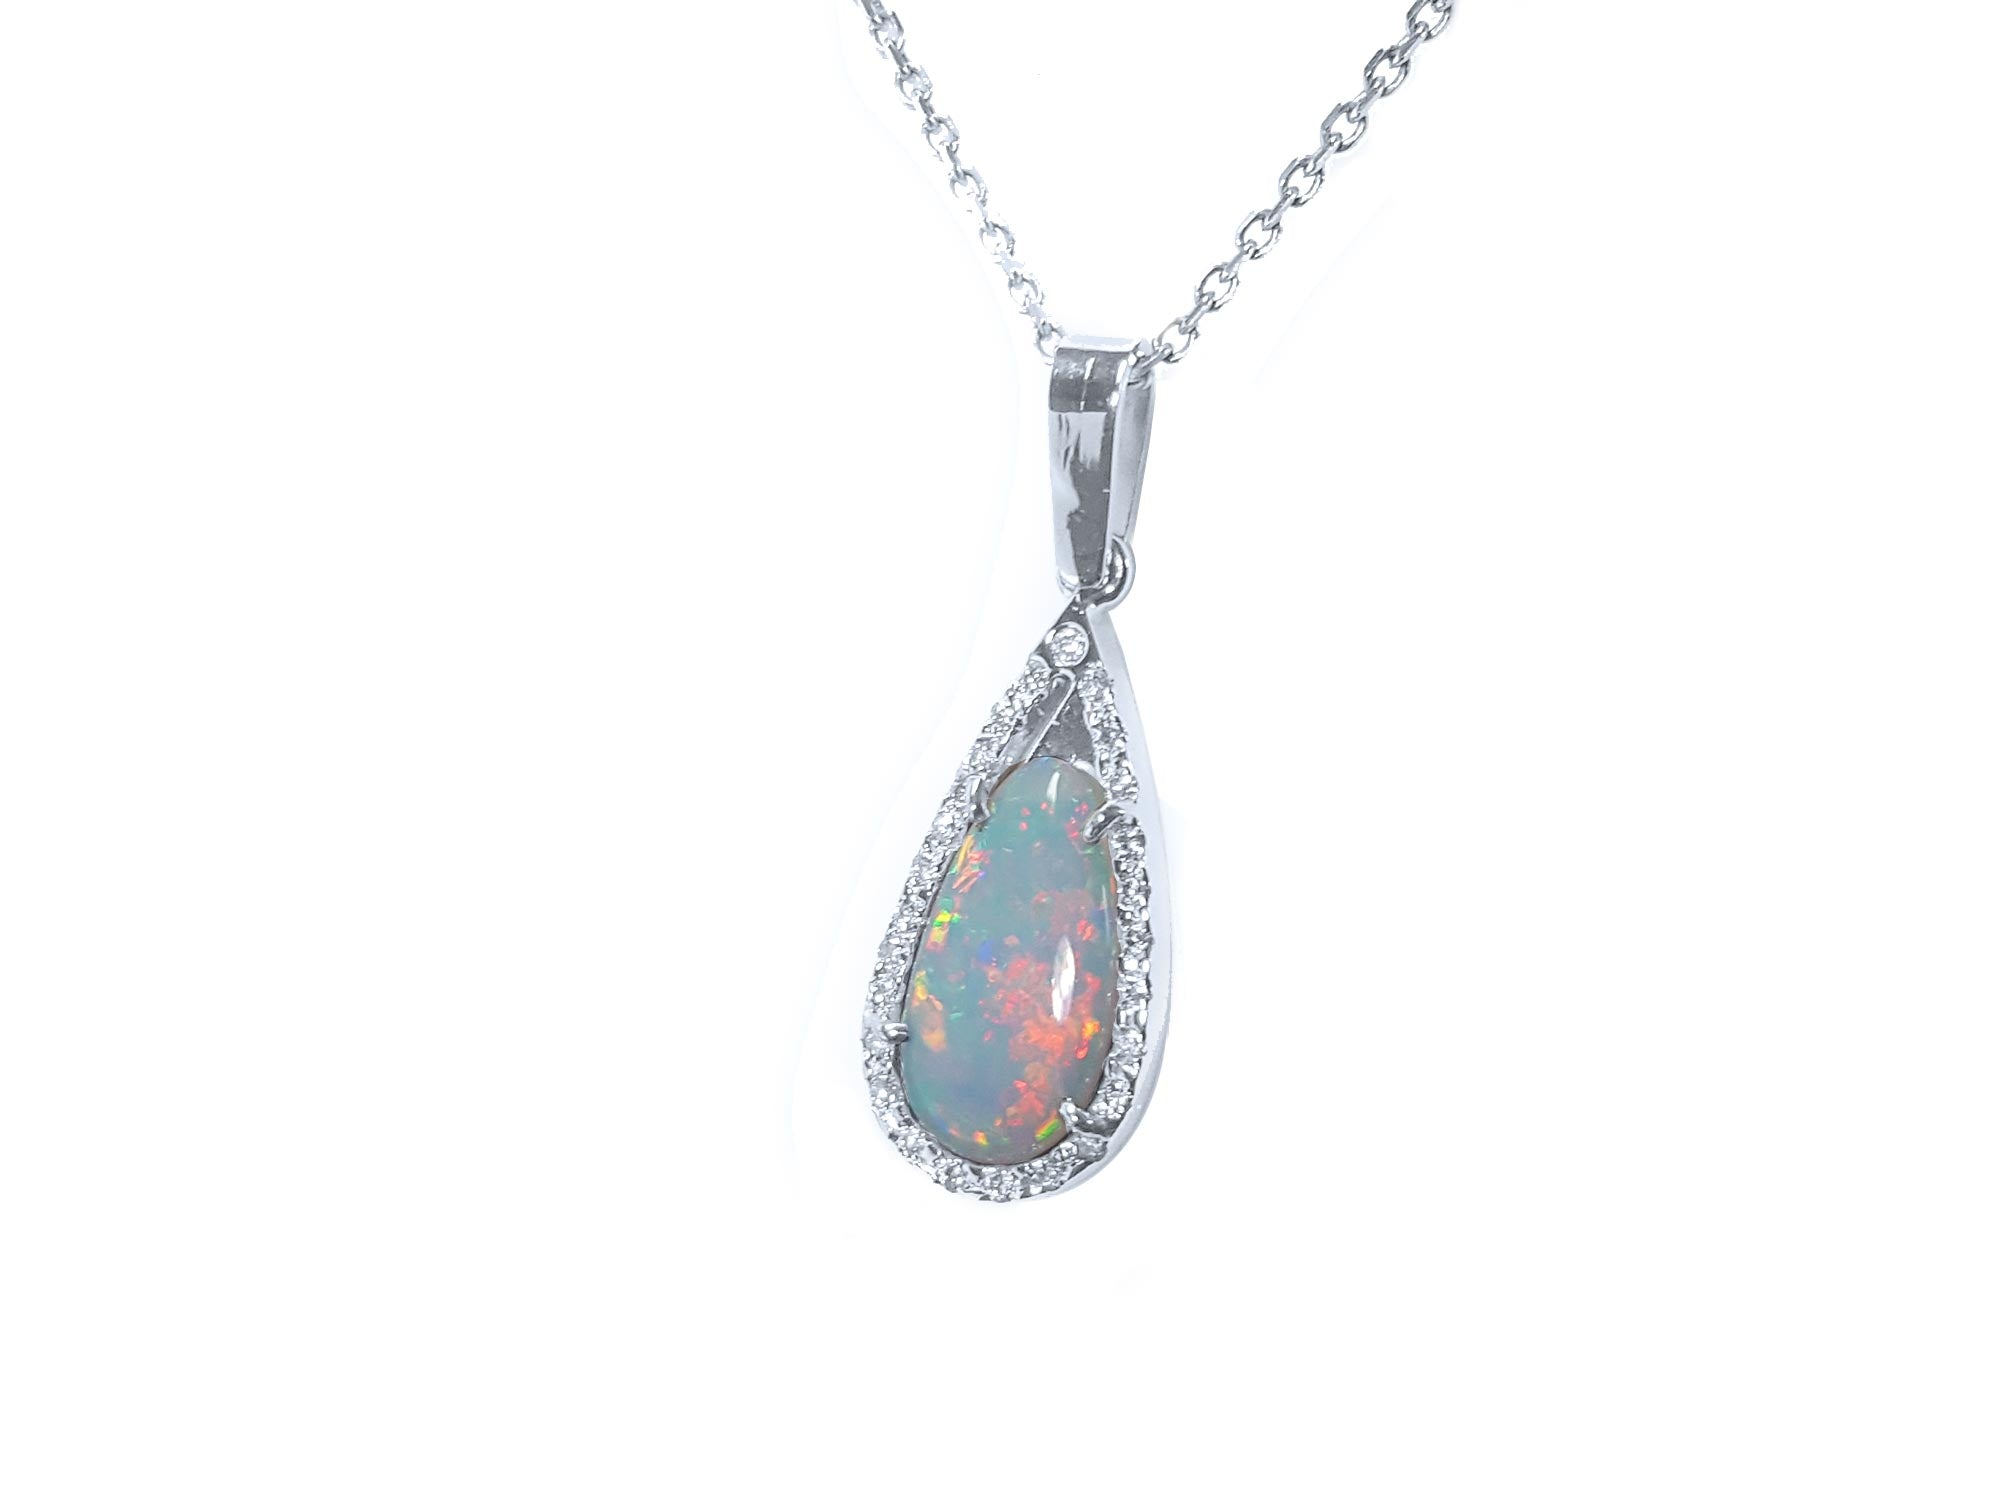 Solid opal pendant